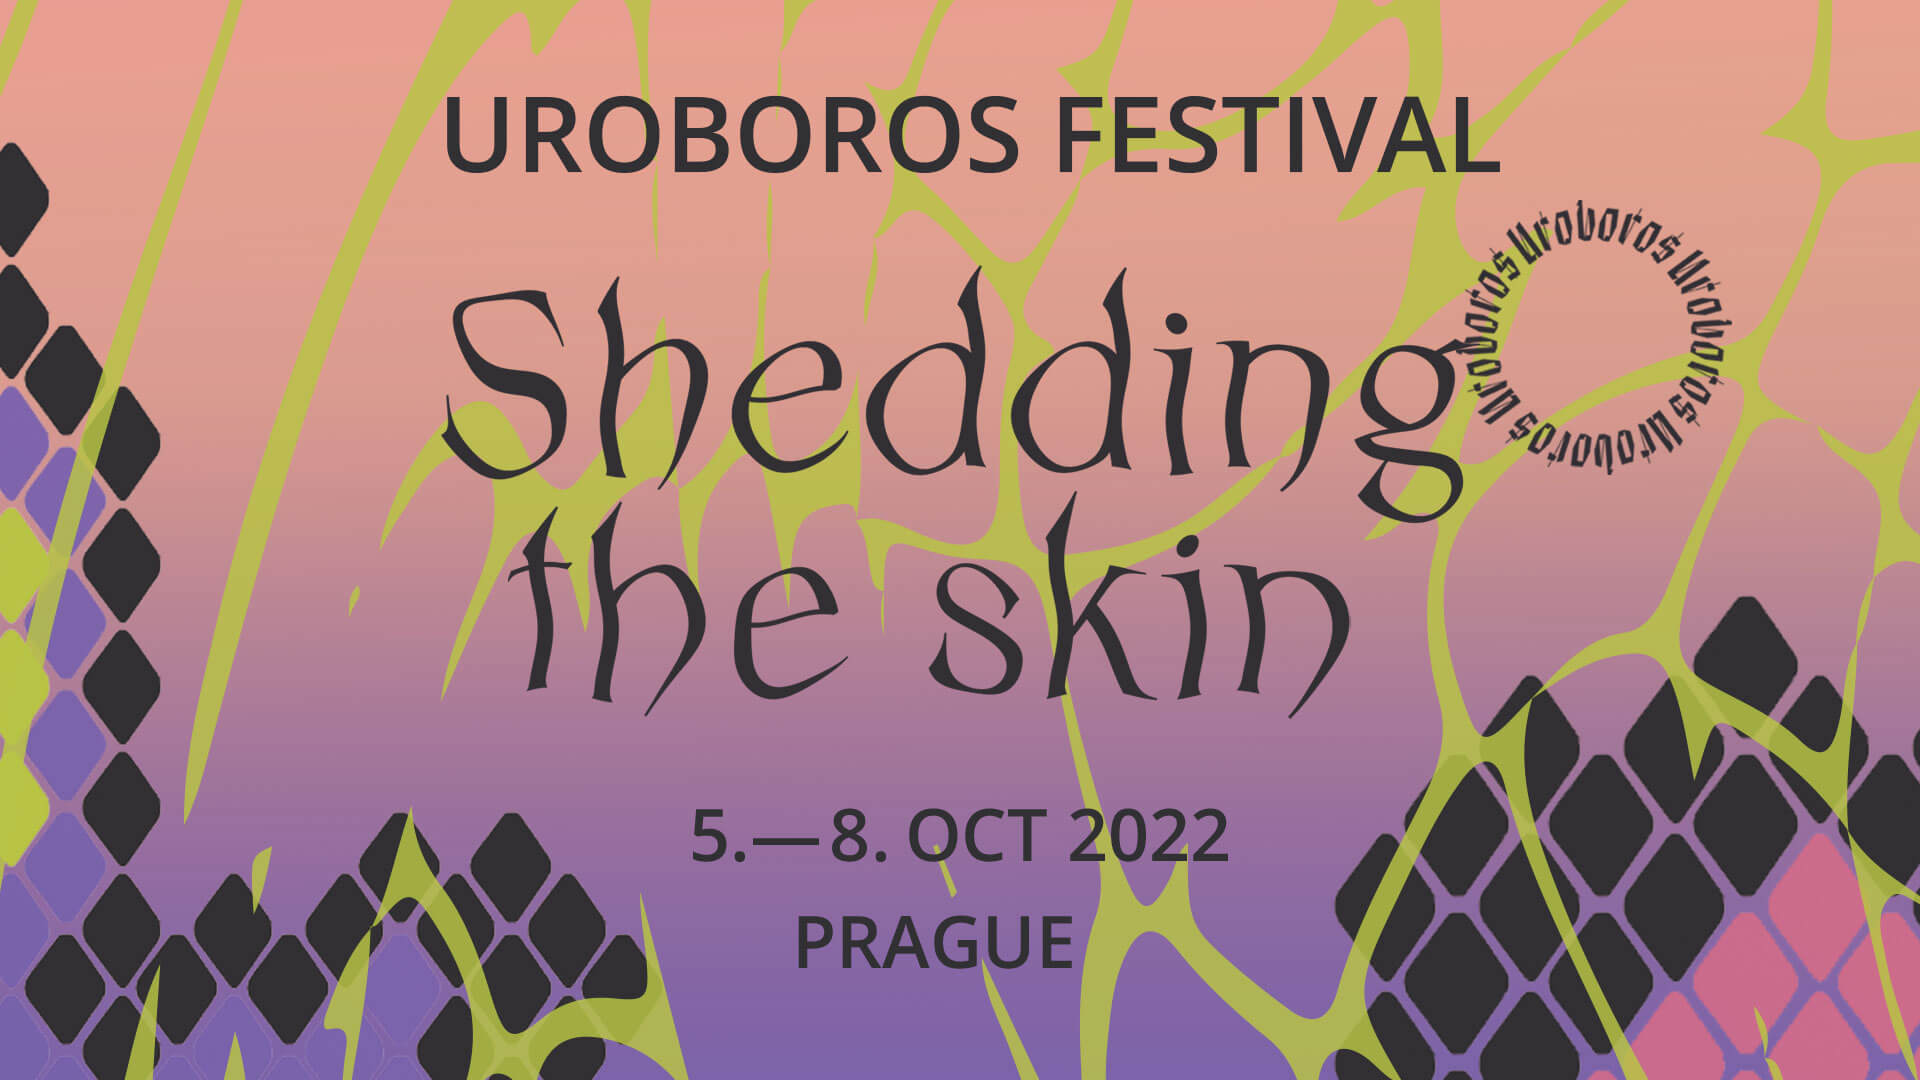 Vizuální identitu festivalu Uroboros vytváří kurátorka a designérka Lenka Hámošová.